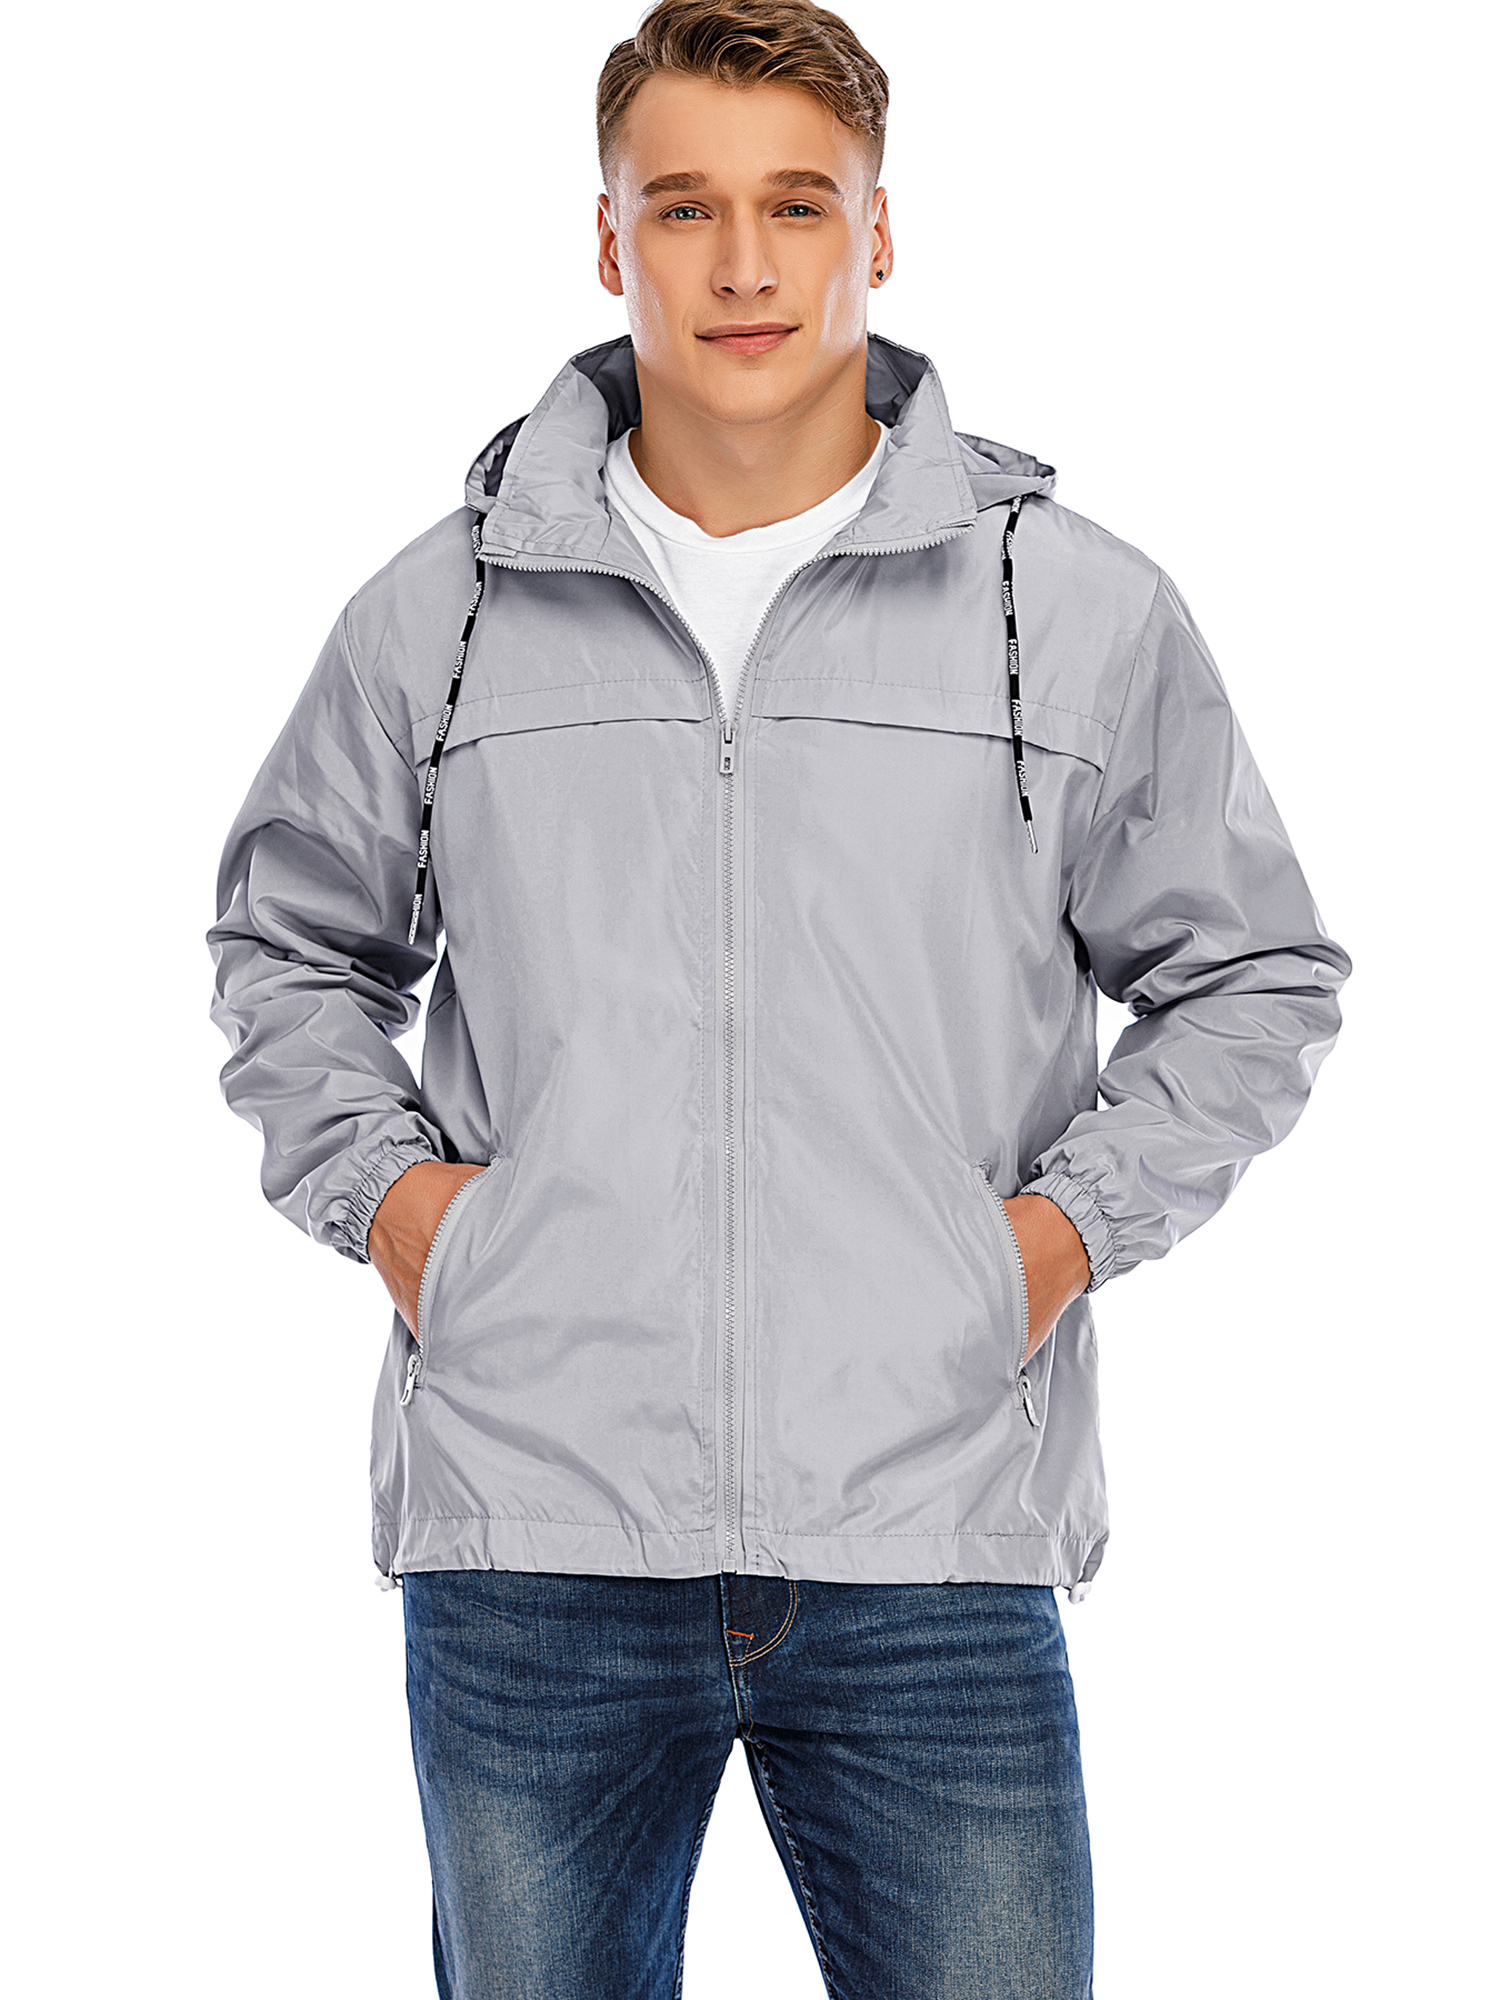 Men's Packable Rain Jacket Outdoor Waterproof Hooded Lightweight Classic Cycling Raincoat Comfortable Casual Windbreaker Rain Jacket - image 1 of 8